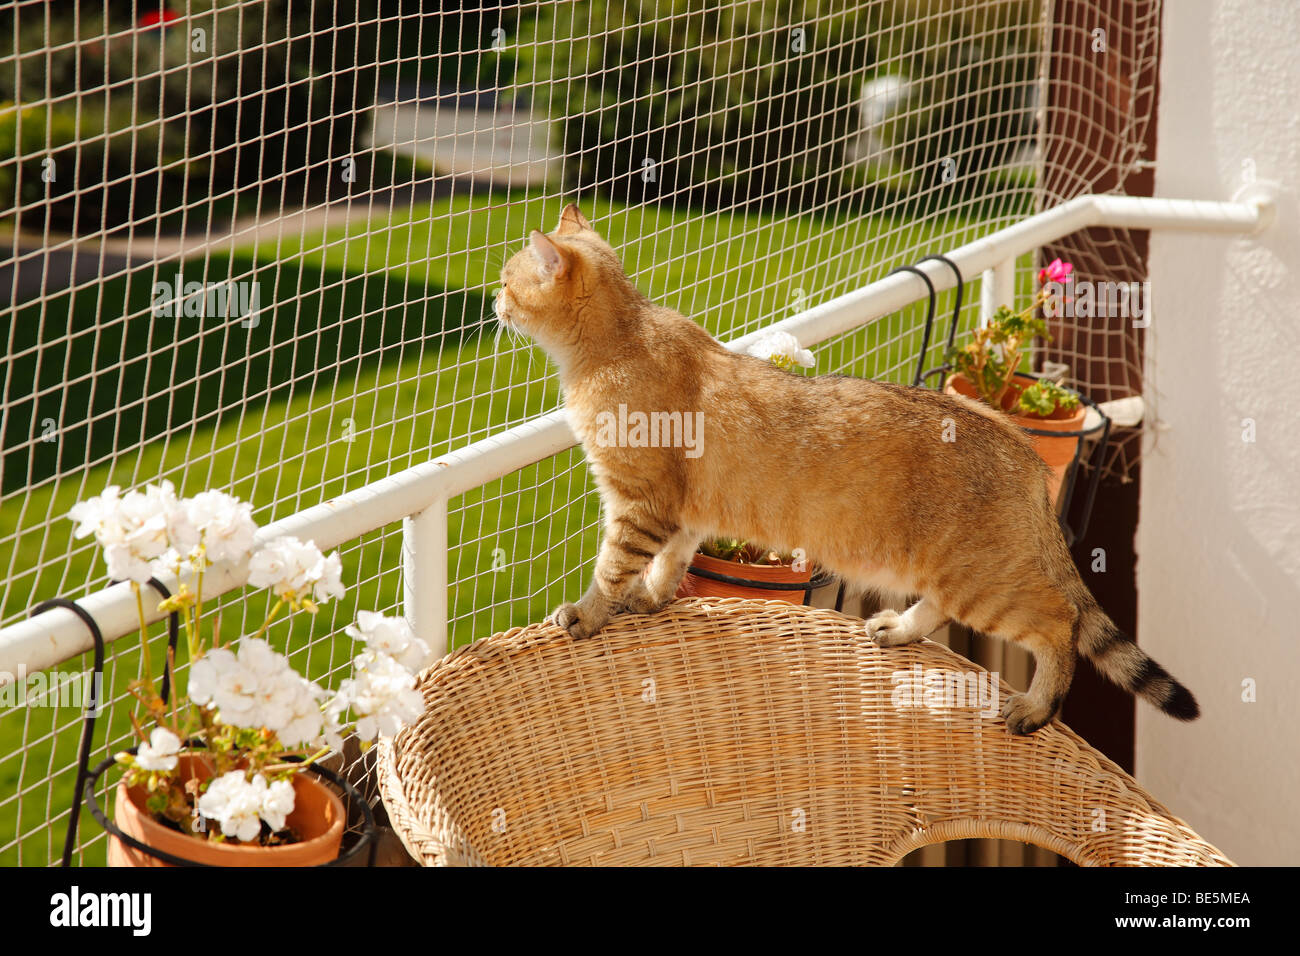 https://c8.alamy.com/comp/BE5MEA/british-shorthair-cat-balcony-net-BE5MEA.jpg